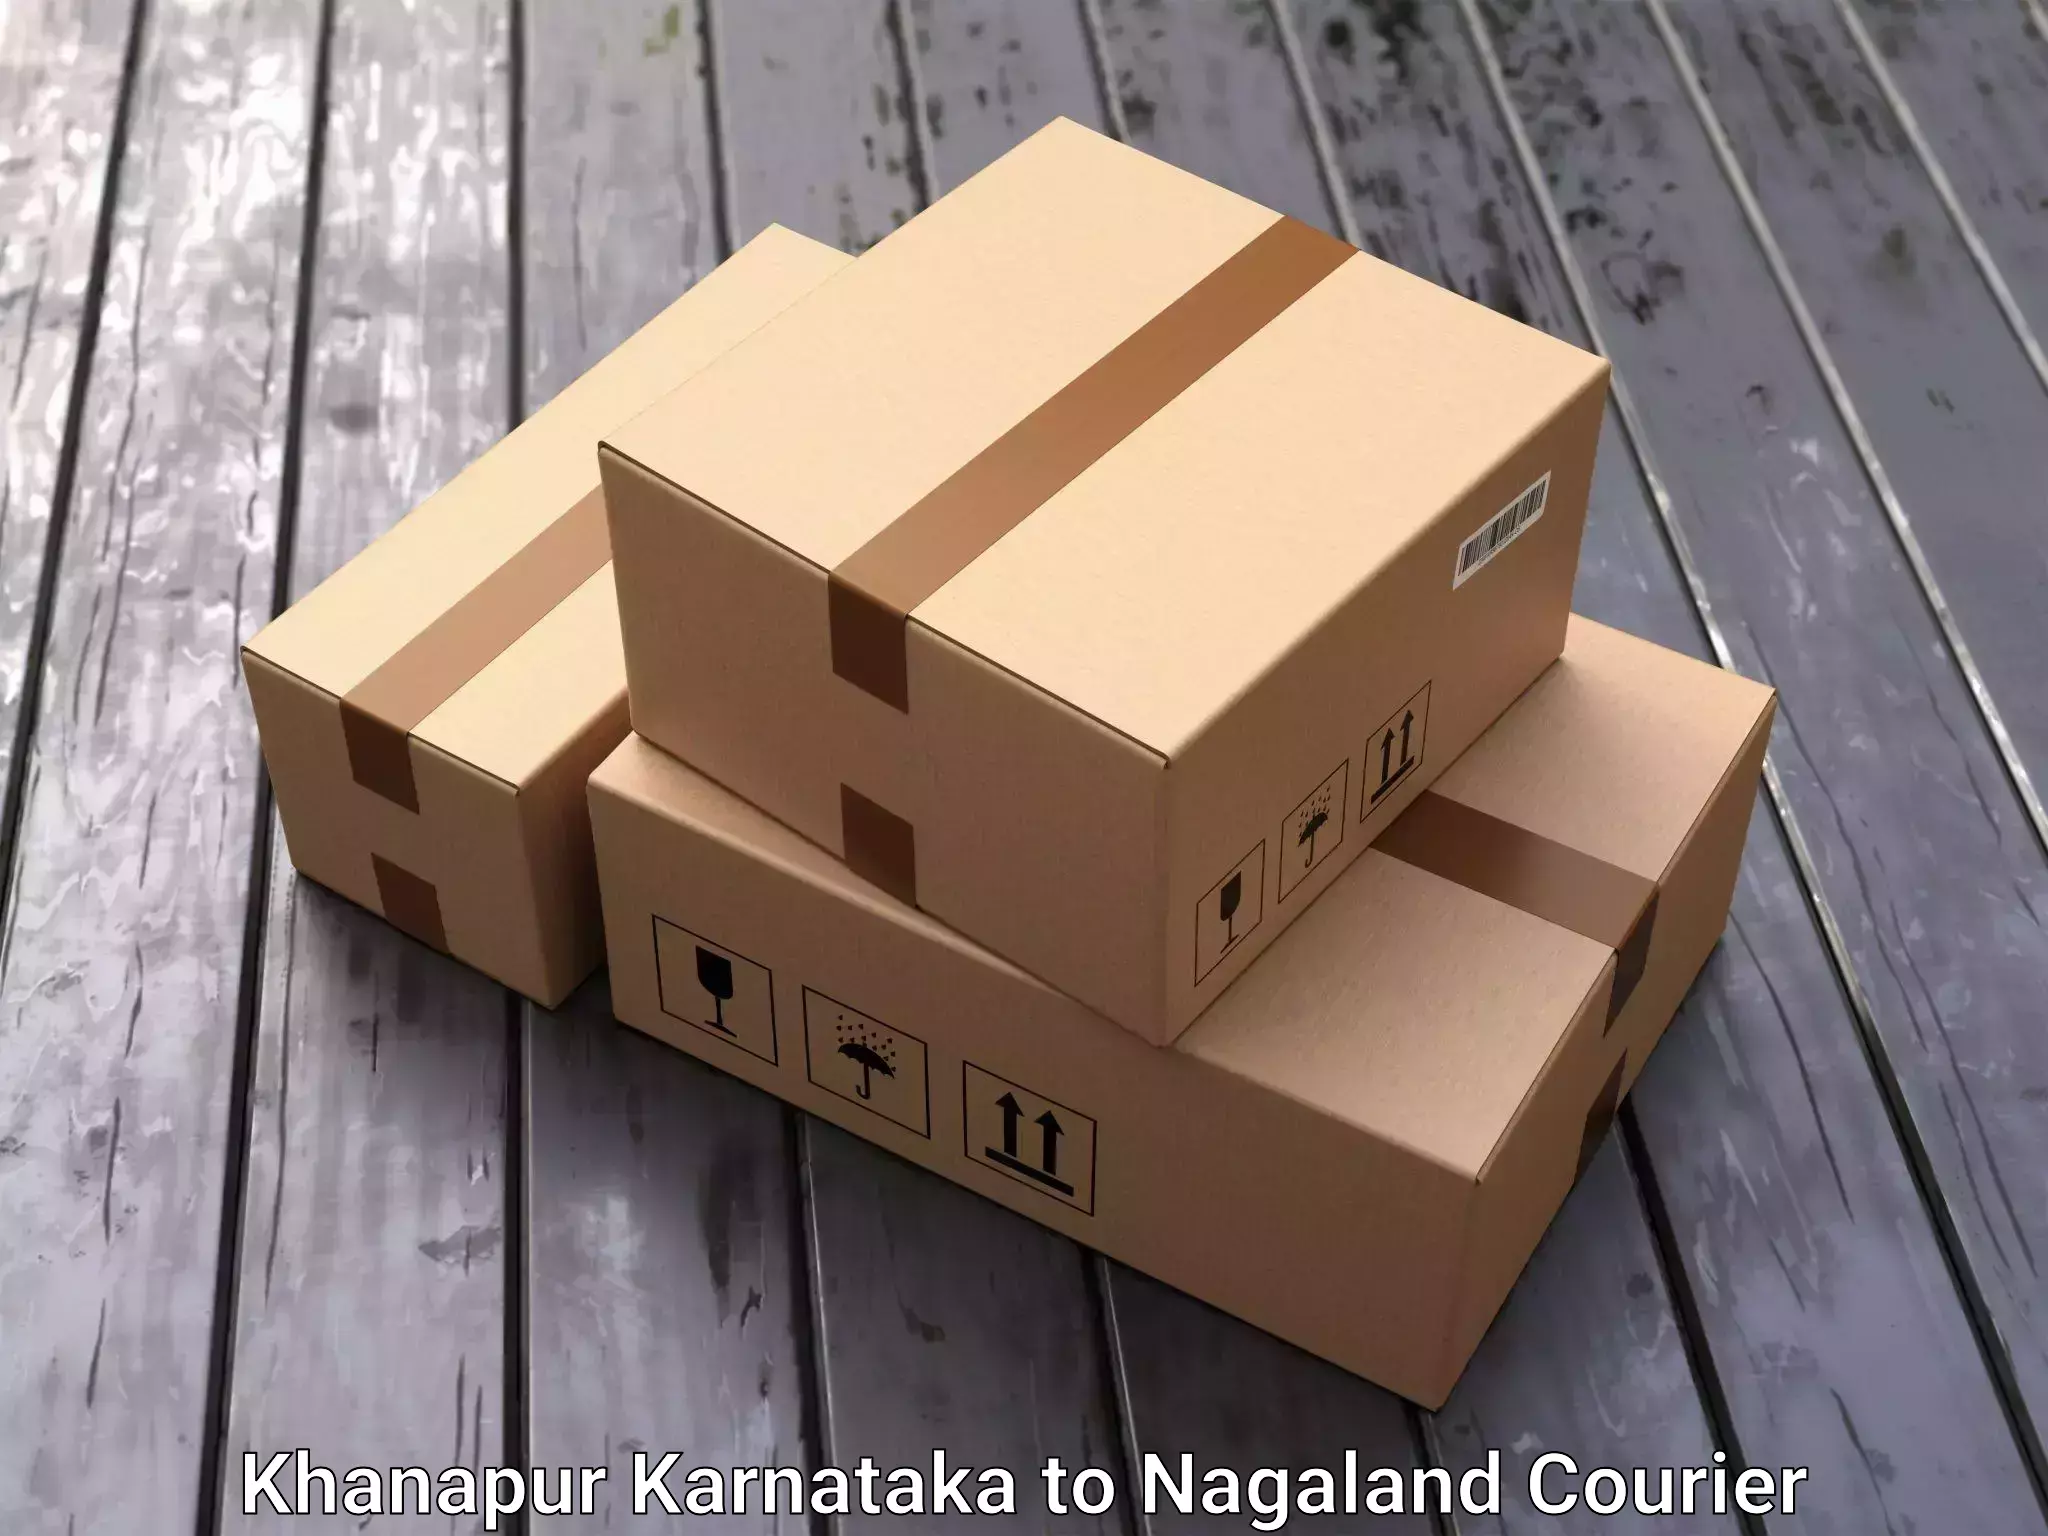 Trusted moving company Khanapur Karnataka to Kiphire